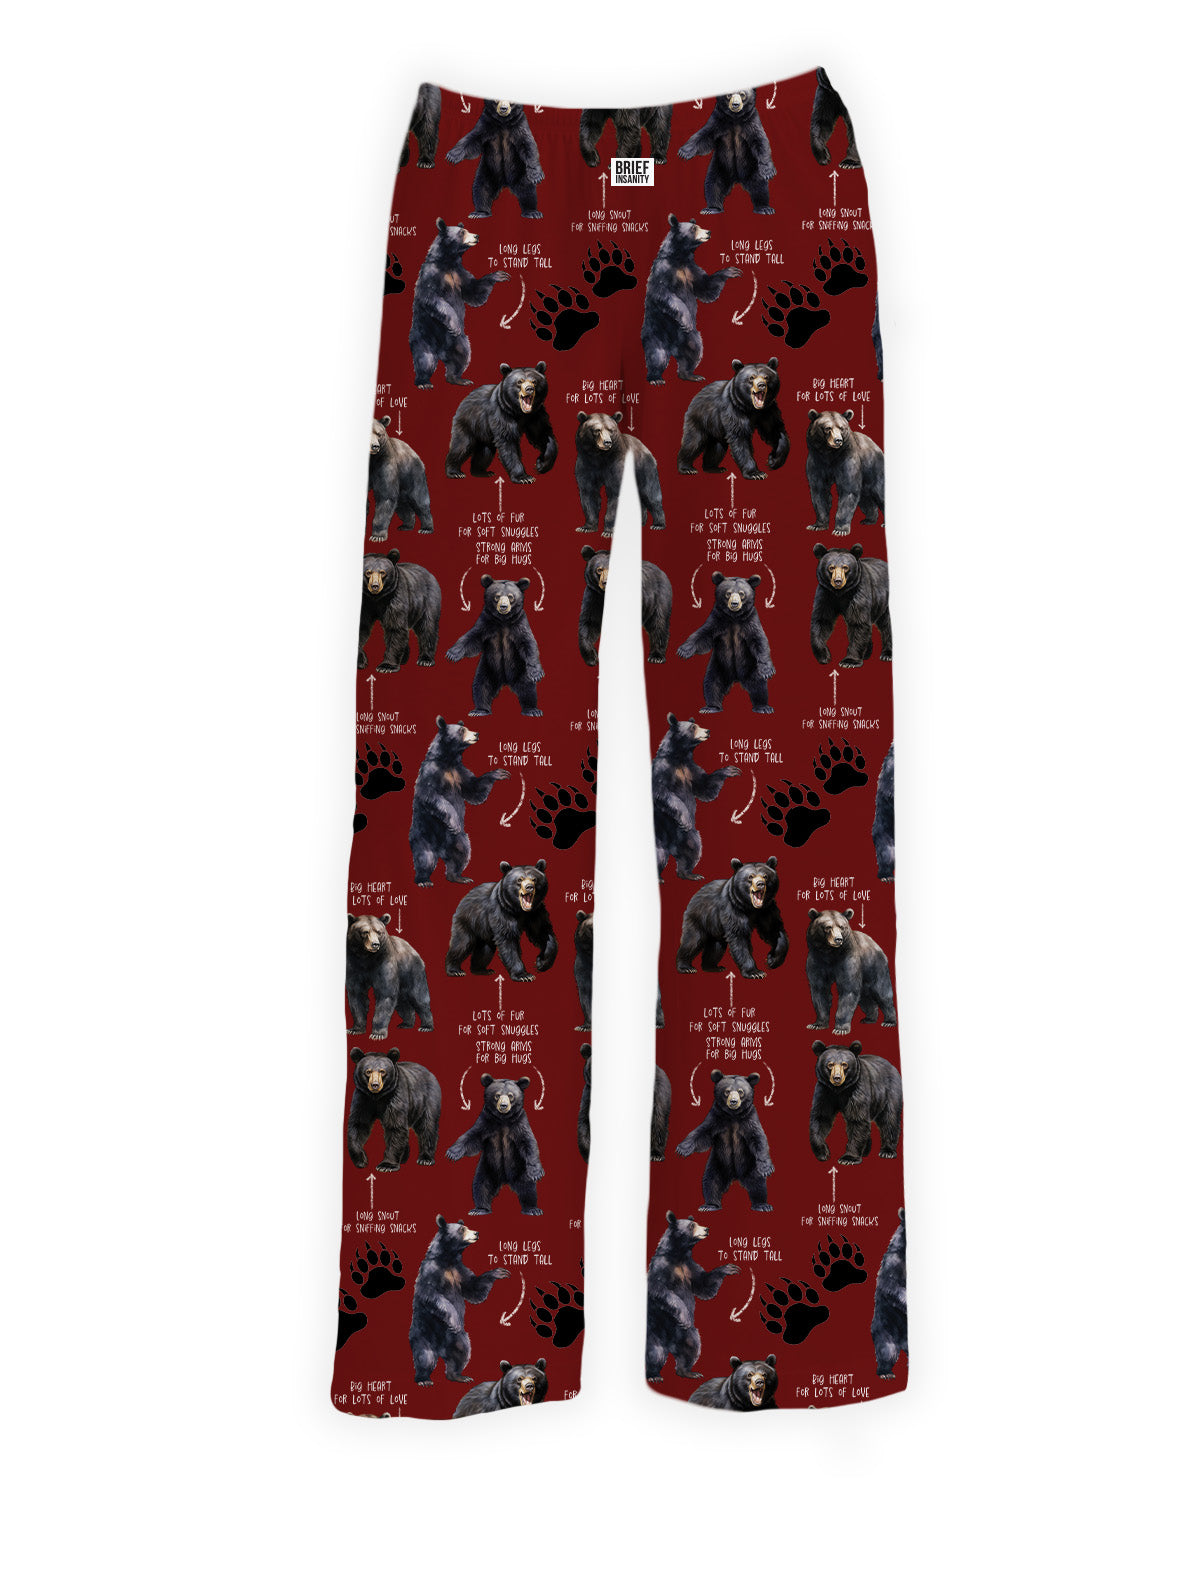 BRIEF INSANITY's Bears All Over Pajama Lounge Pants